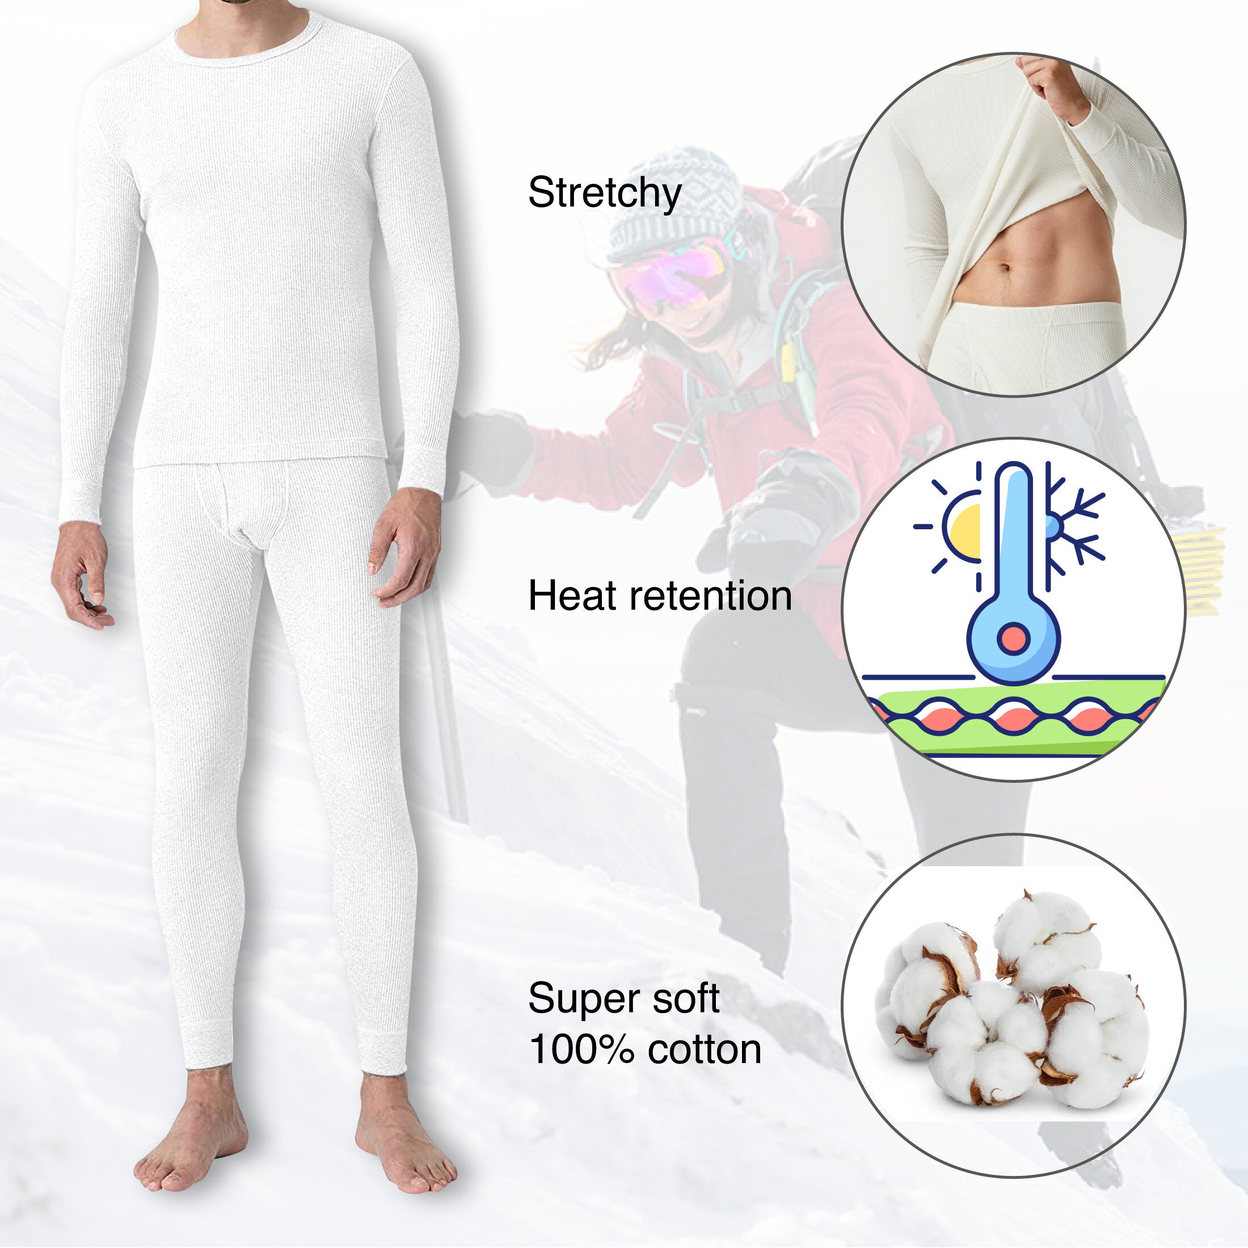 Multi-Set: Men's Super-Soft Cotton Waffle Knit Winter Thermal Underwear Set - 1-pack, Small